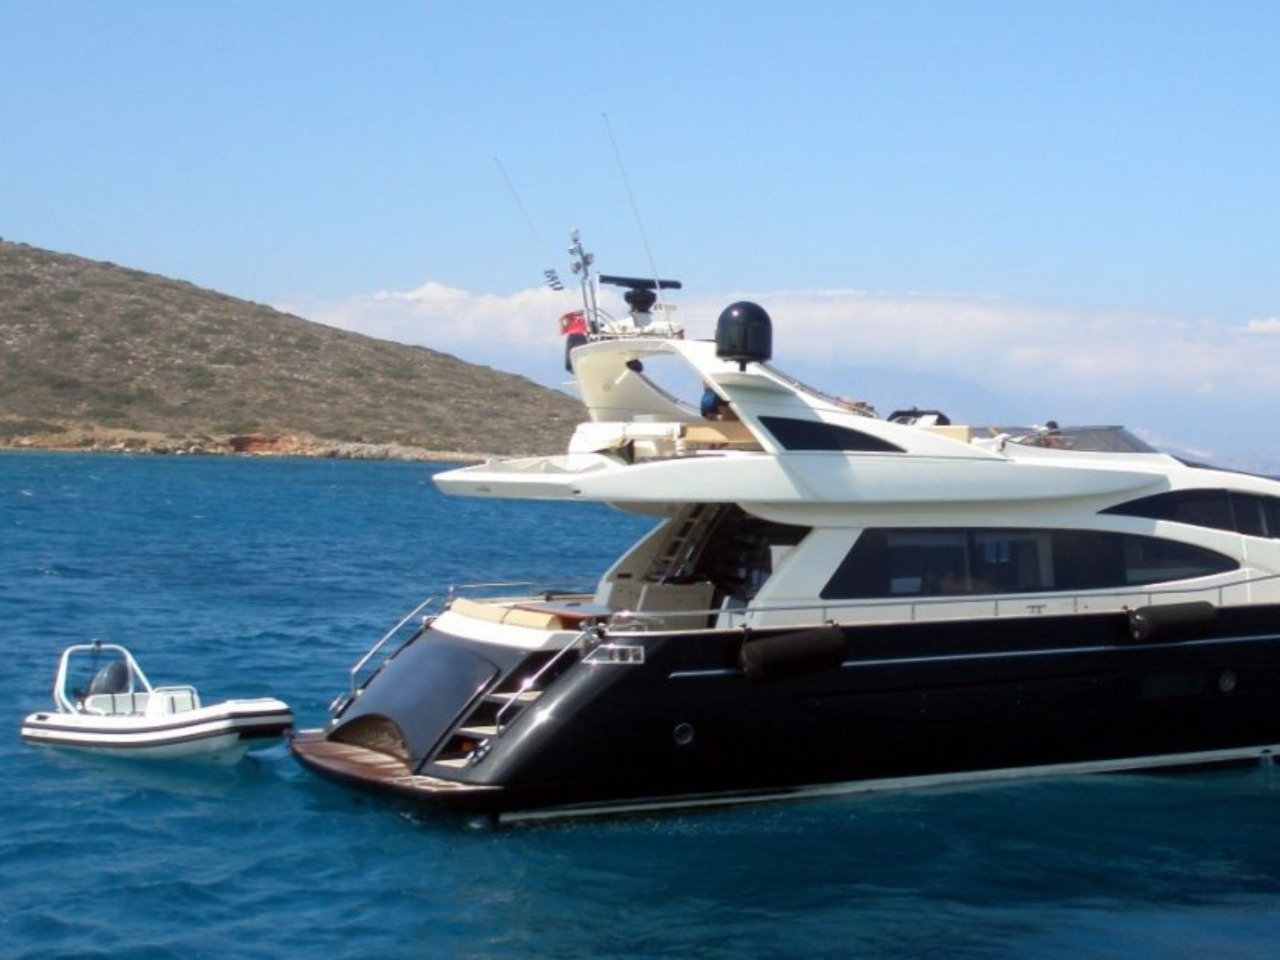  Vip-тур по Босфору на яхте | Цена 520€, отзывы, описание экскурсии